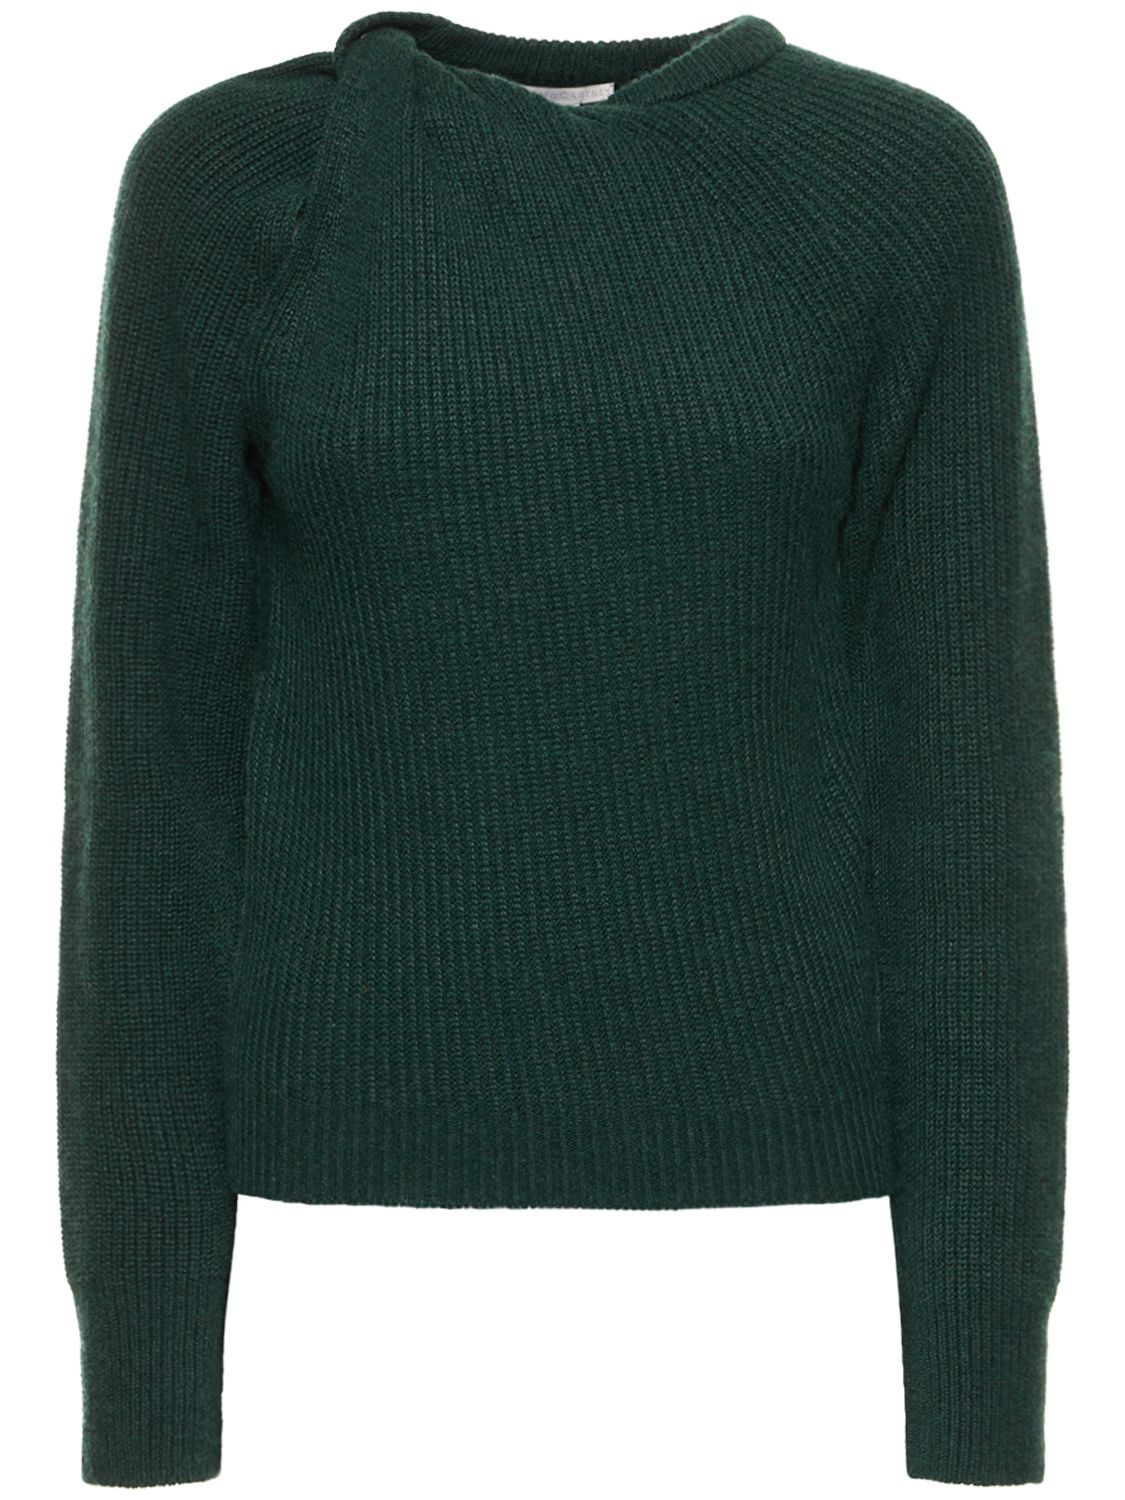 Cashmere Rib Knit Twisted Sweater